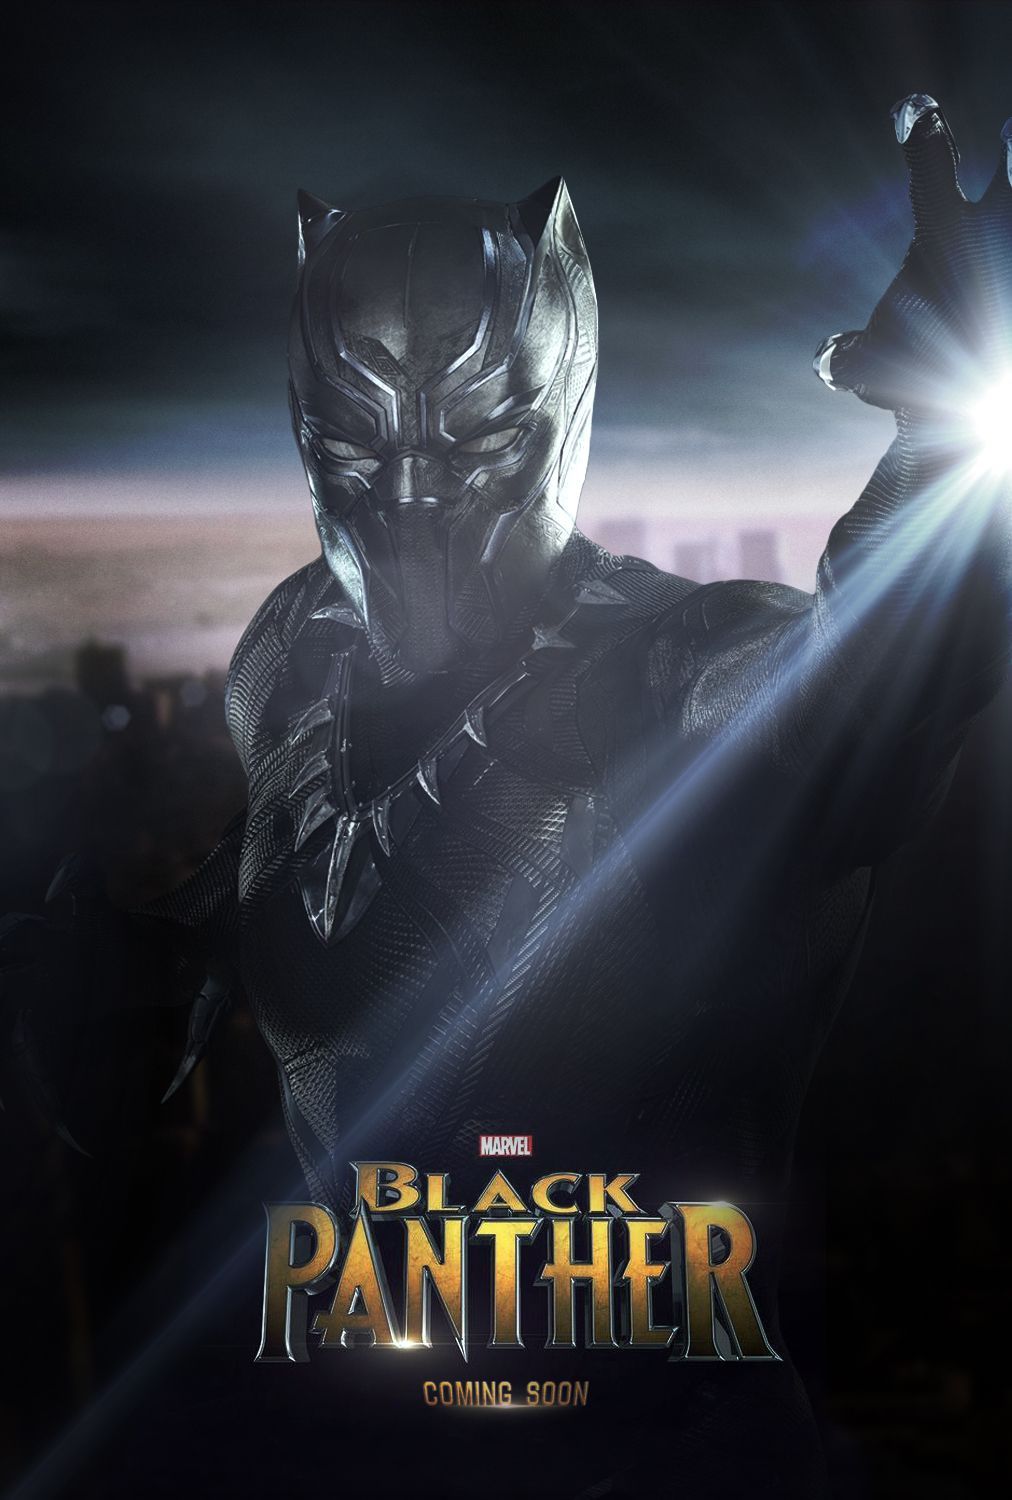 Black Panther International Poster 2018 Wallpapers